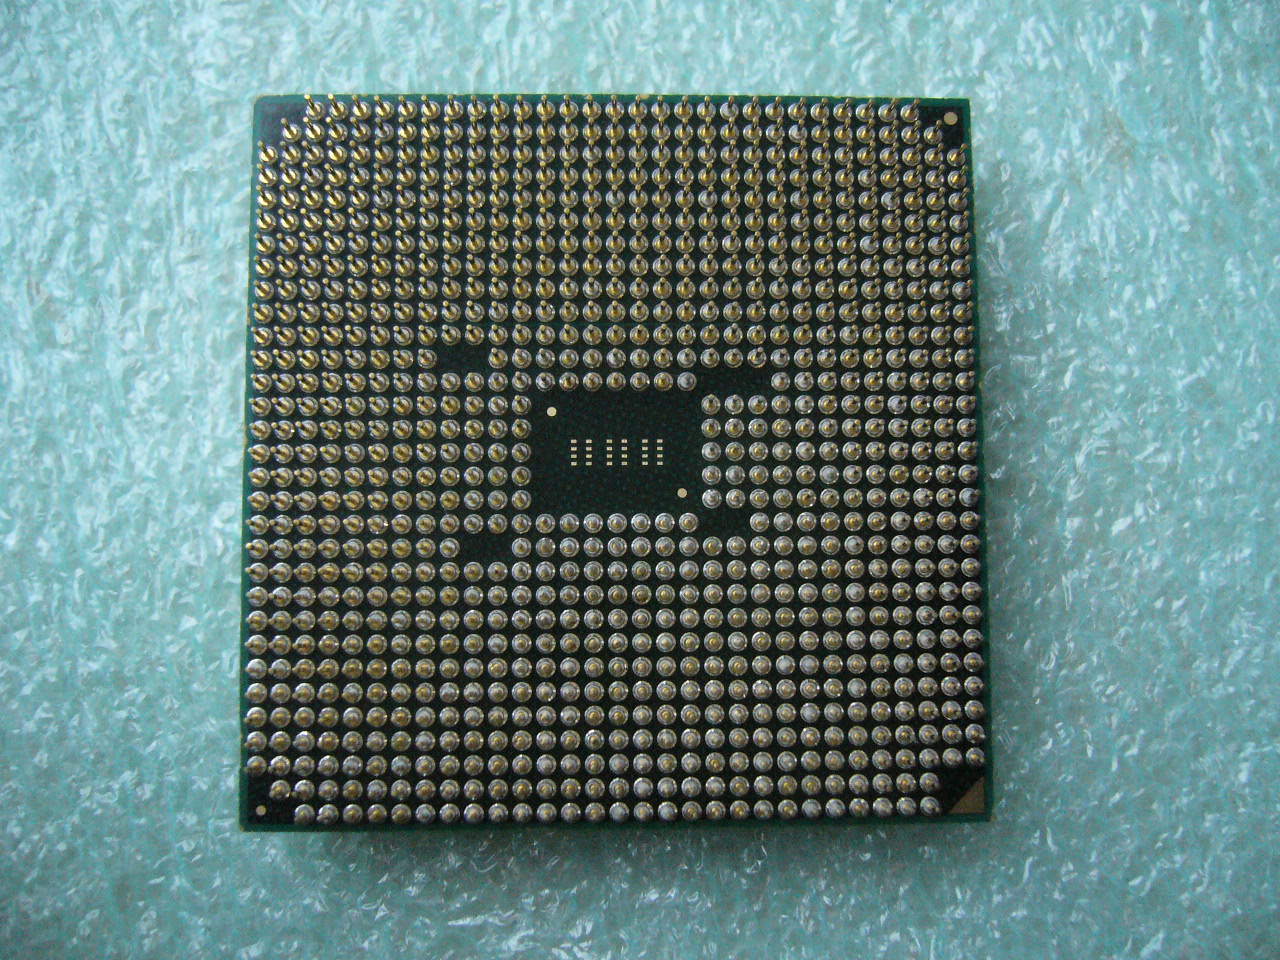 QTY 1x AMD A4-6300 B 3.7 GHz Dual-Core (AD630BOKA23HL) CPU Socket FM2 - zum Schließen ins Bild klicken